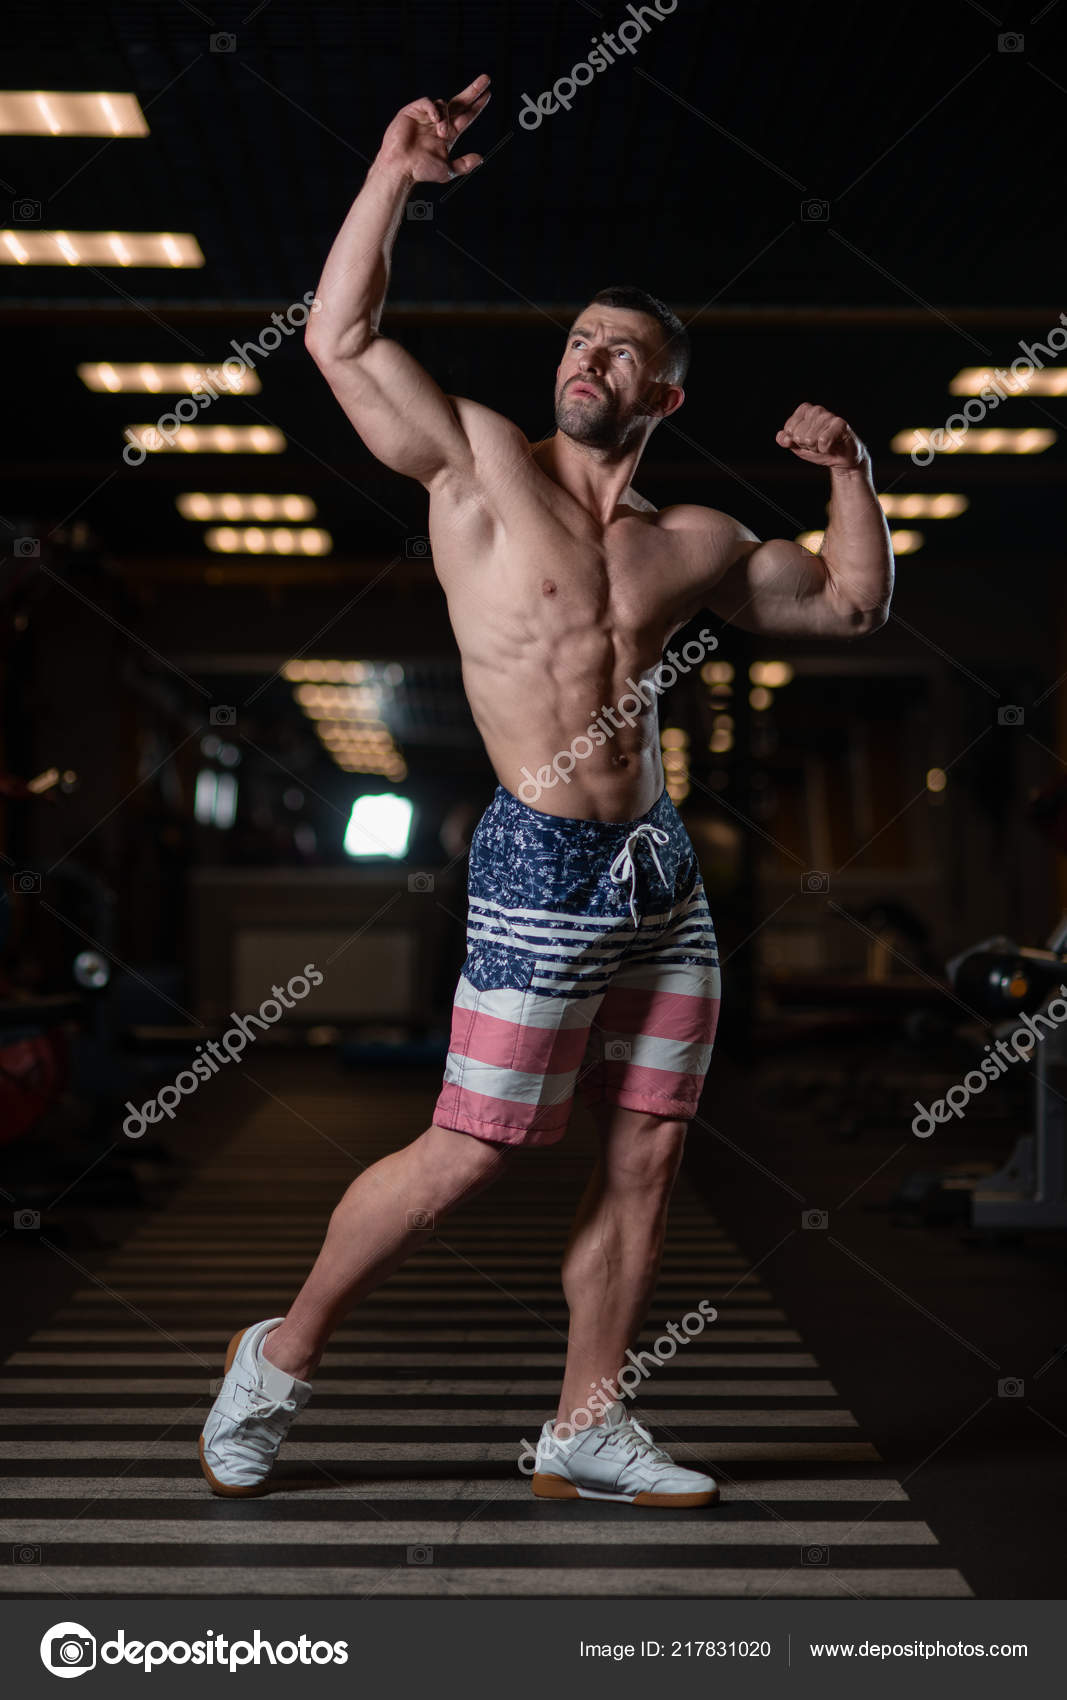 IRONMAN bodybuilding muscle magazine JOHN FARBOTNIK 2-51 | eBay